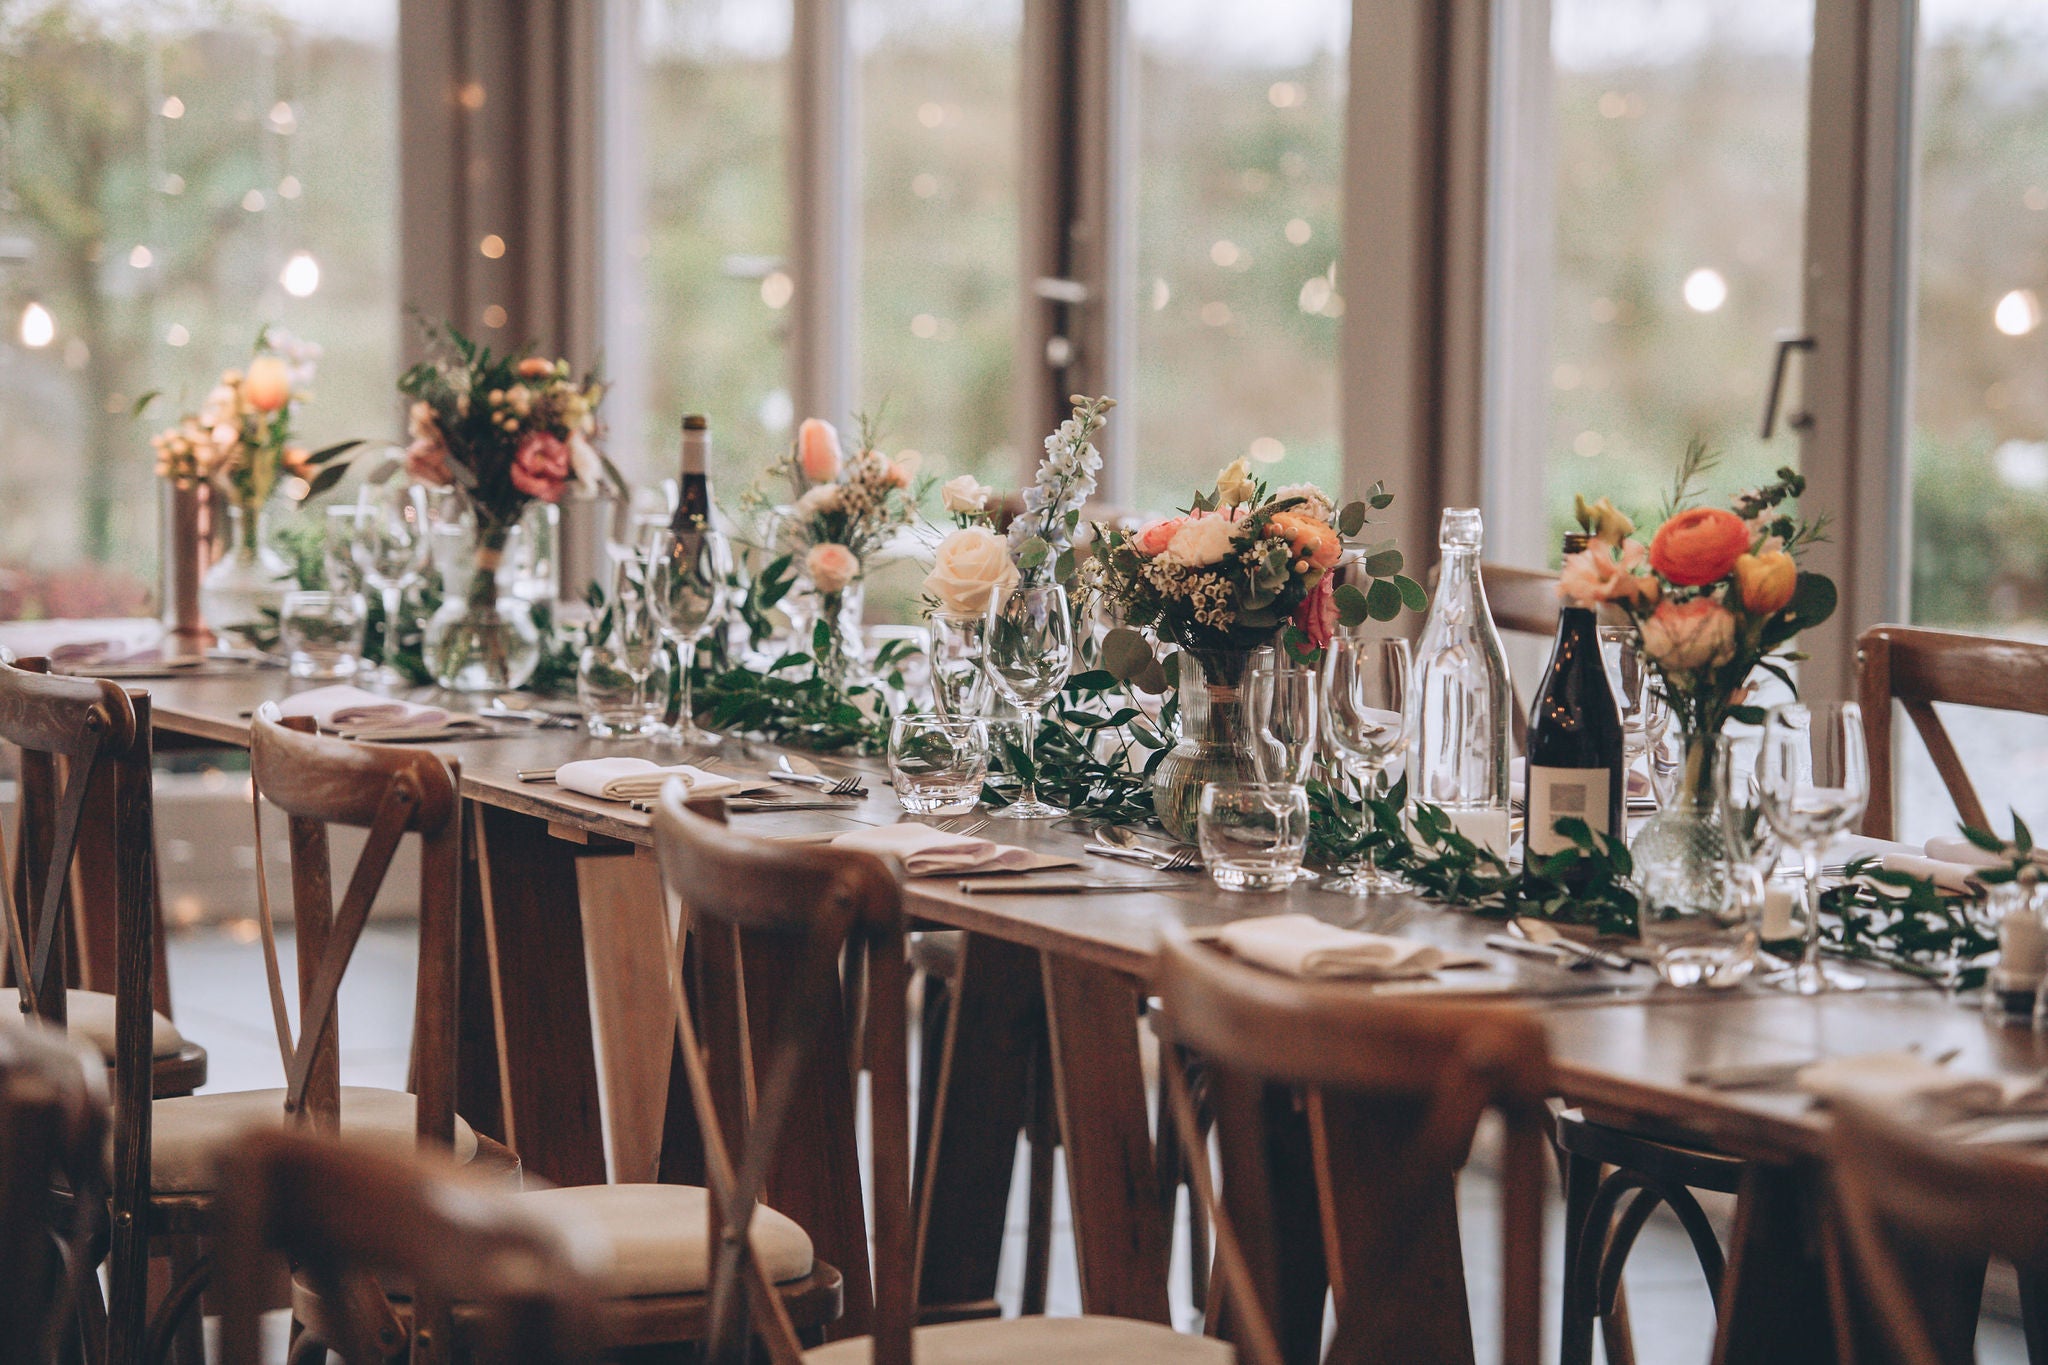 Flower vases on wedding food tables at Trevenna barns